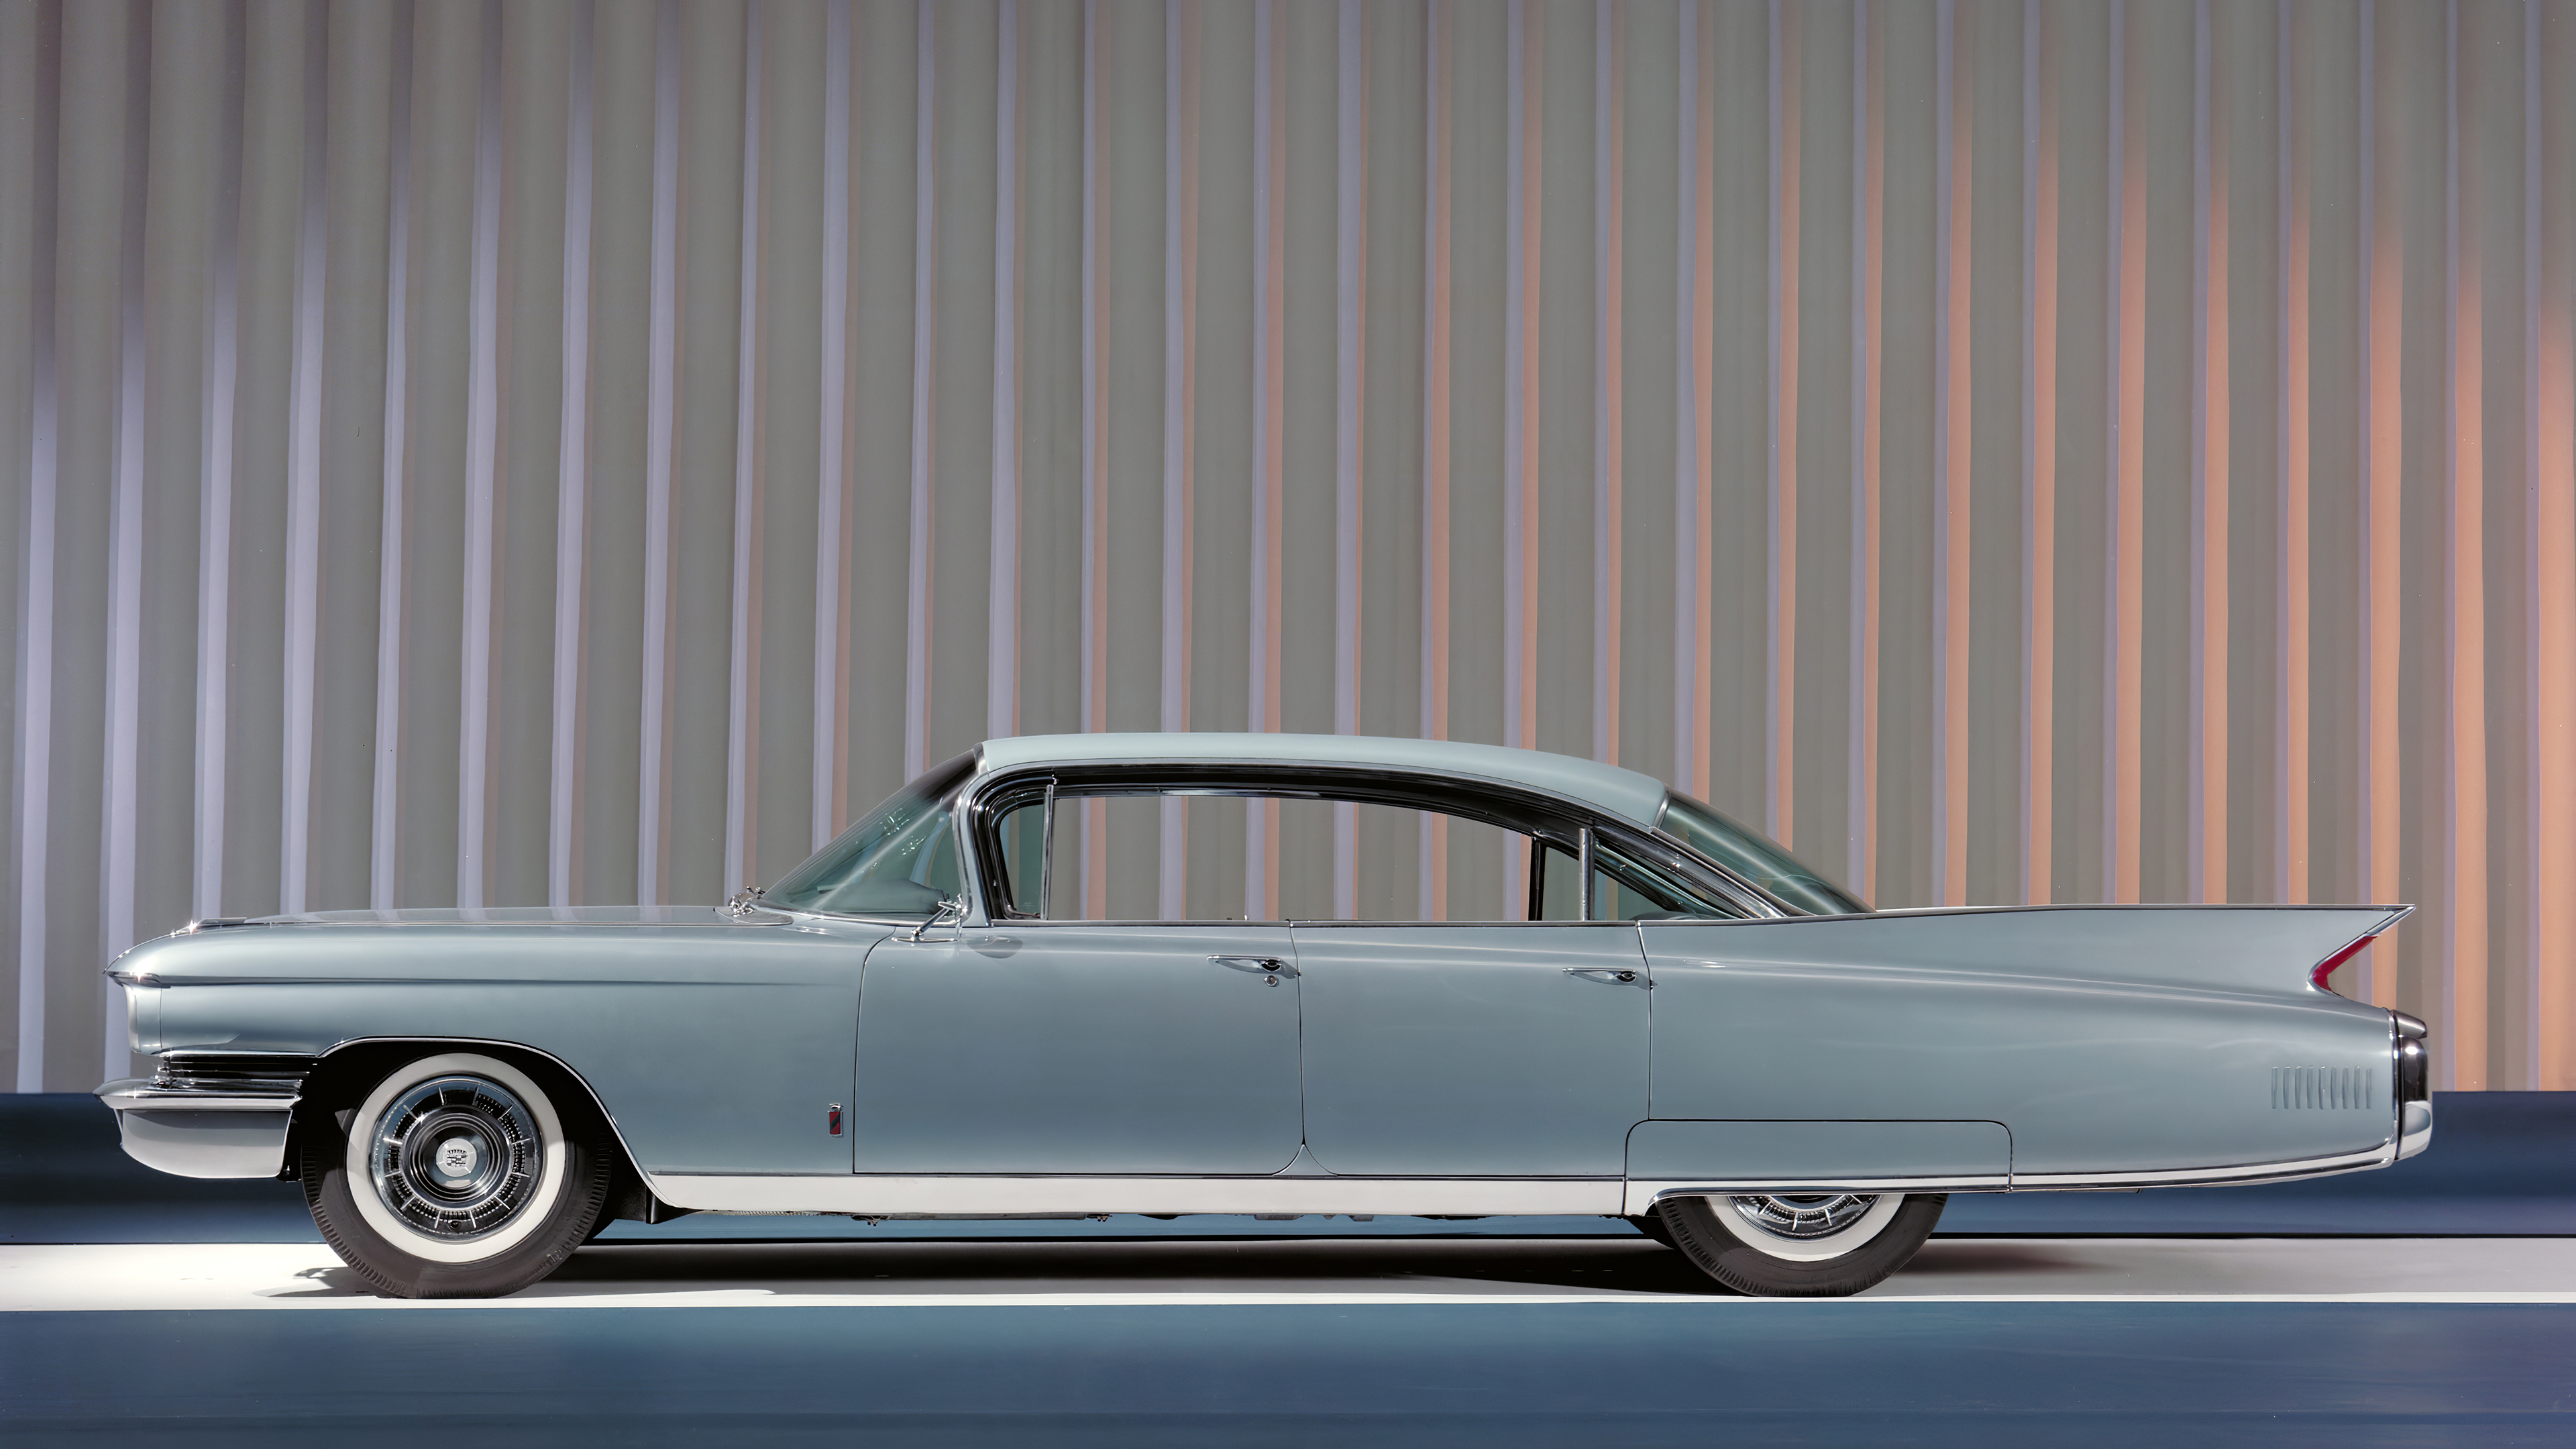 1960 Cadillac Fleetwood Sixty Special - Cadillac Sixty Special - HD Wallpaper 